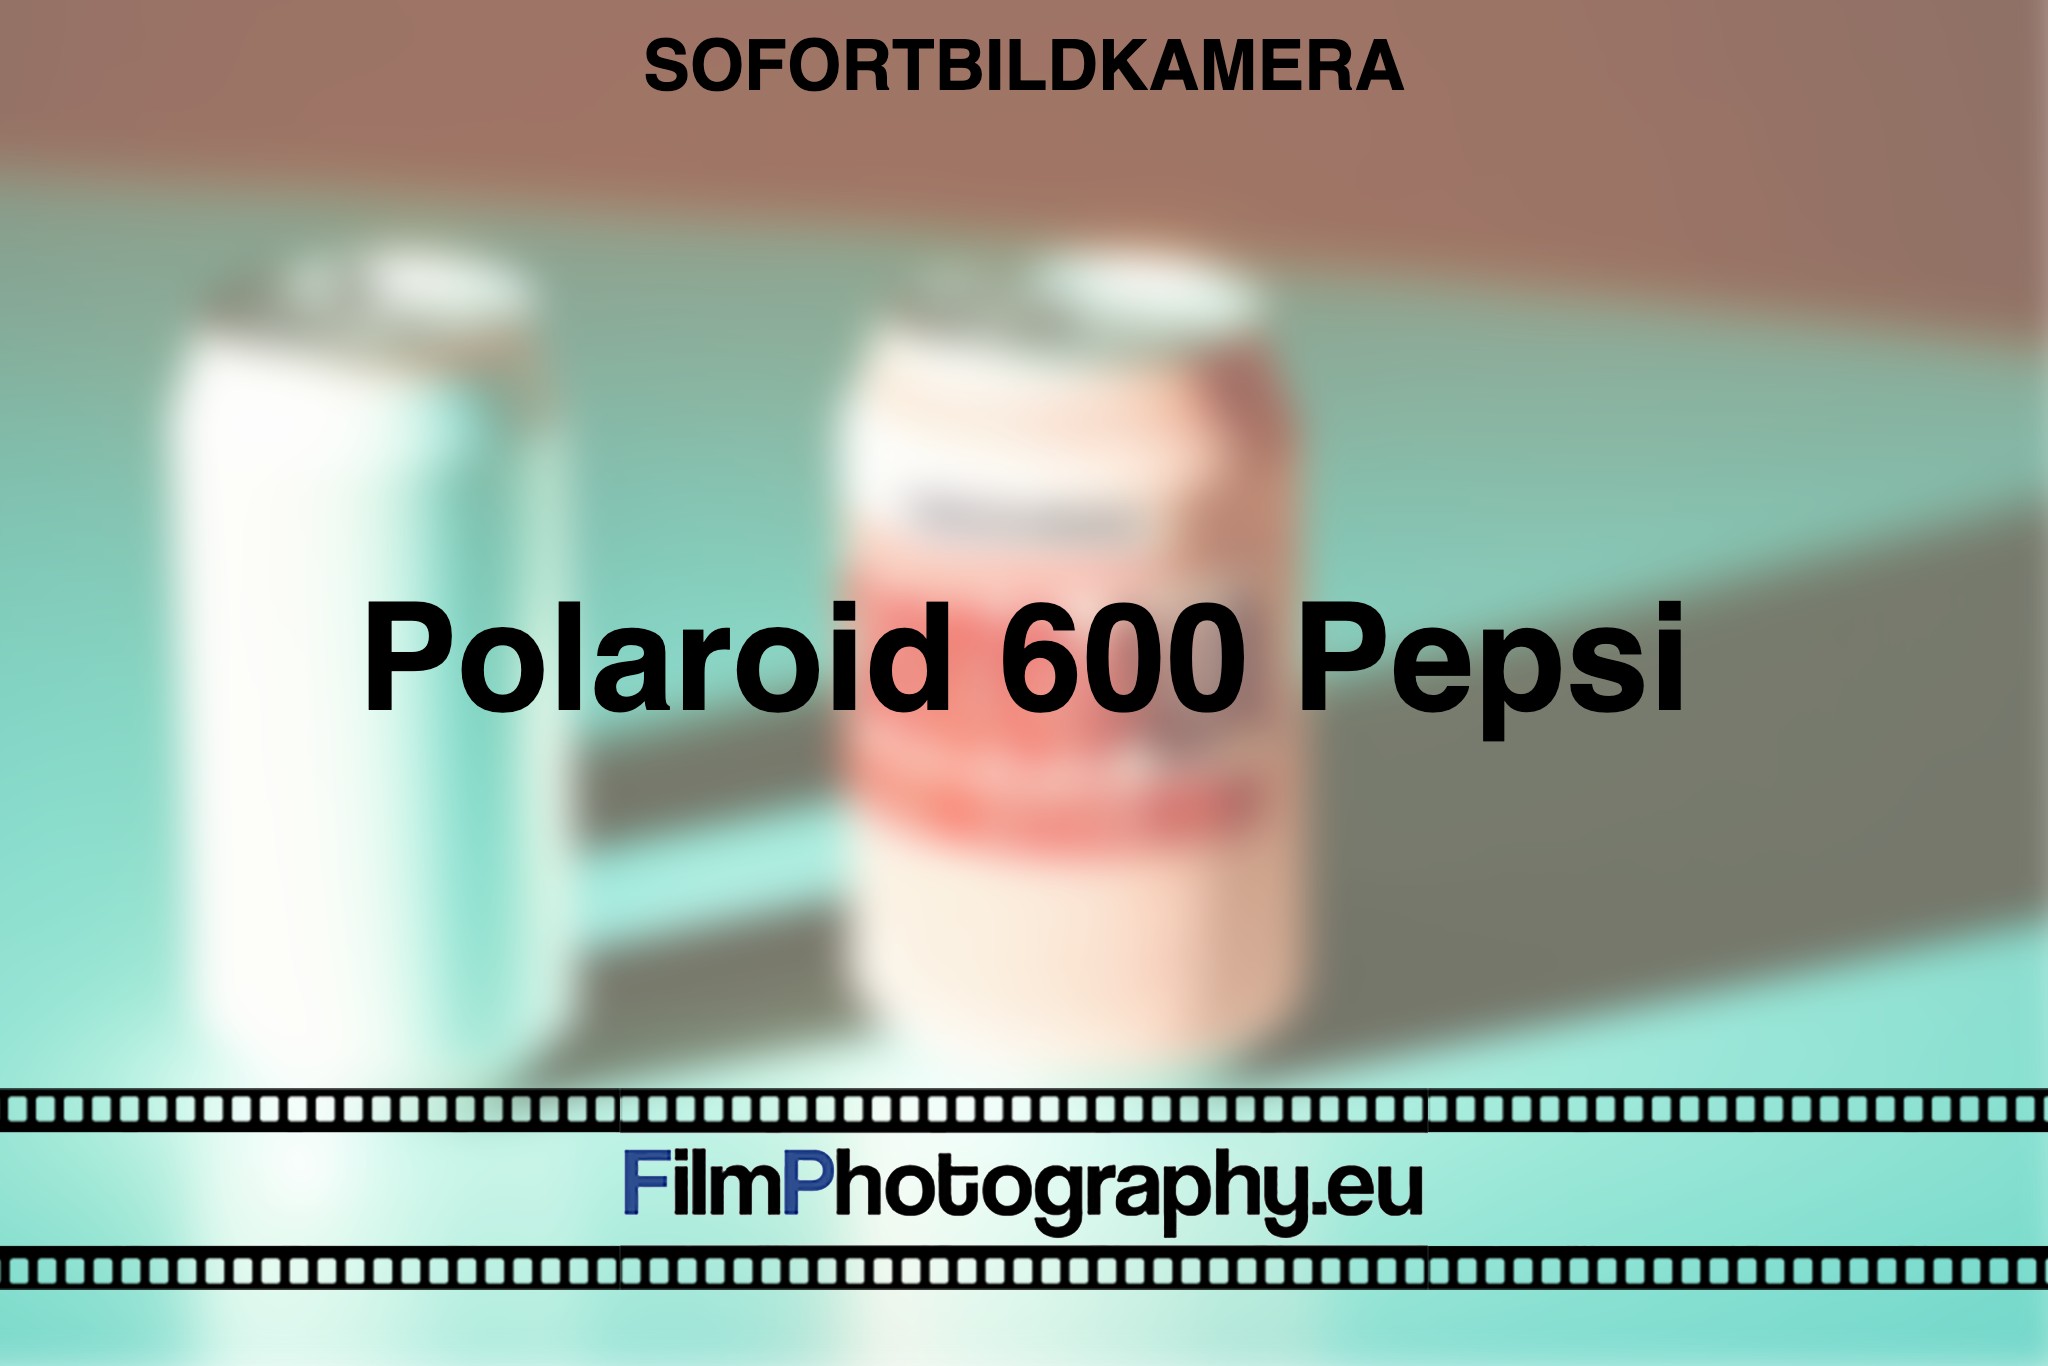 polaroid-600-pepsi-sofortbildkamera-fp-bnv